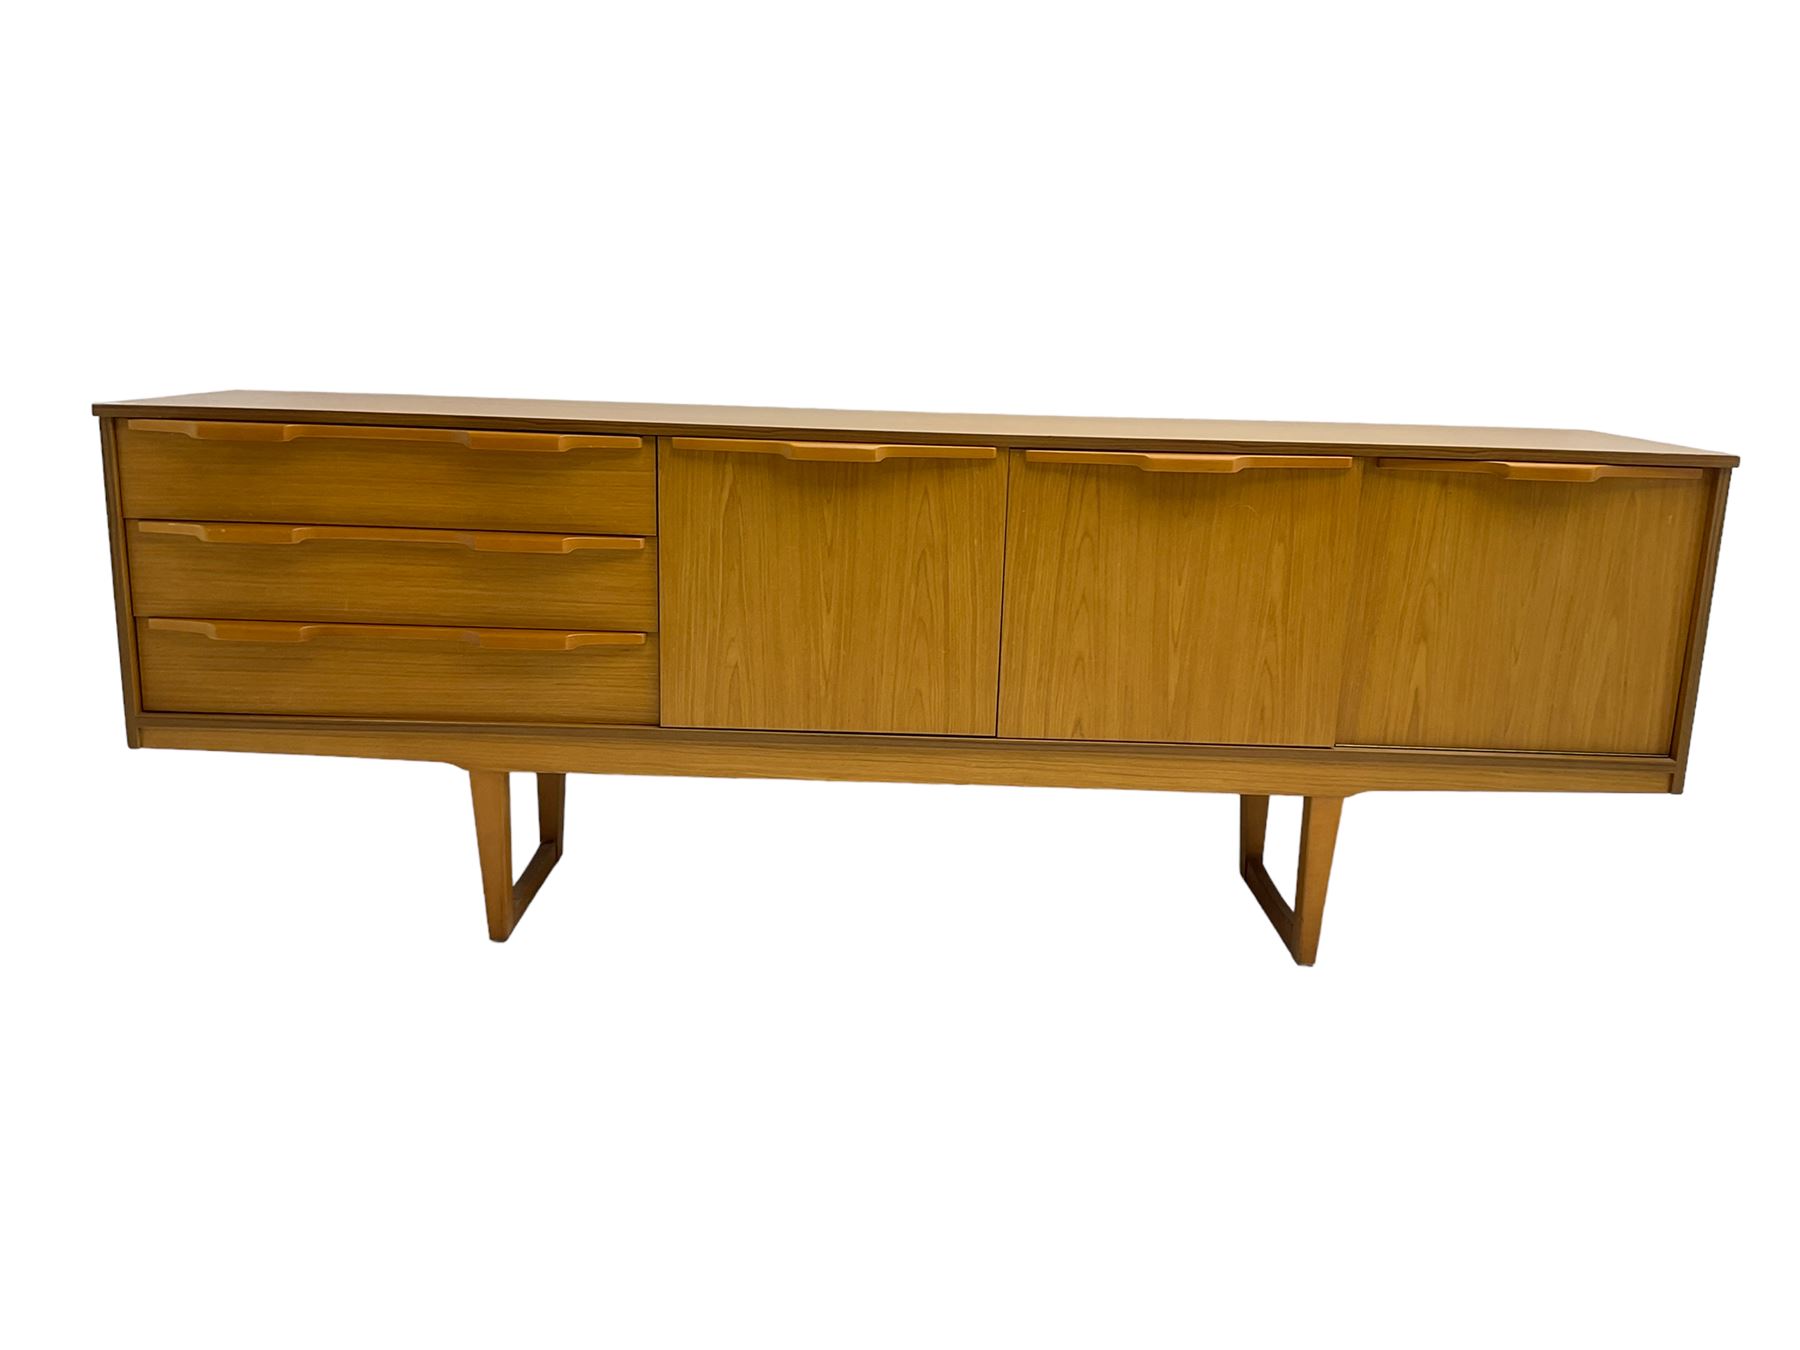 Stonehill Furniture (SF) Ltd - mid-20th century teak sideboard